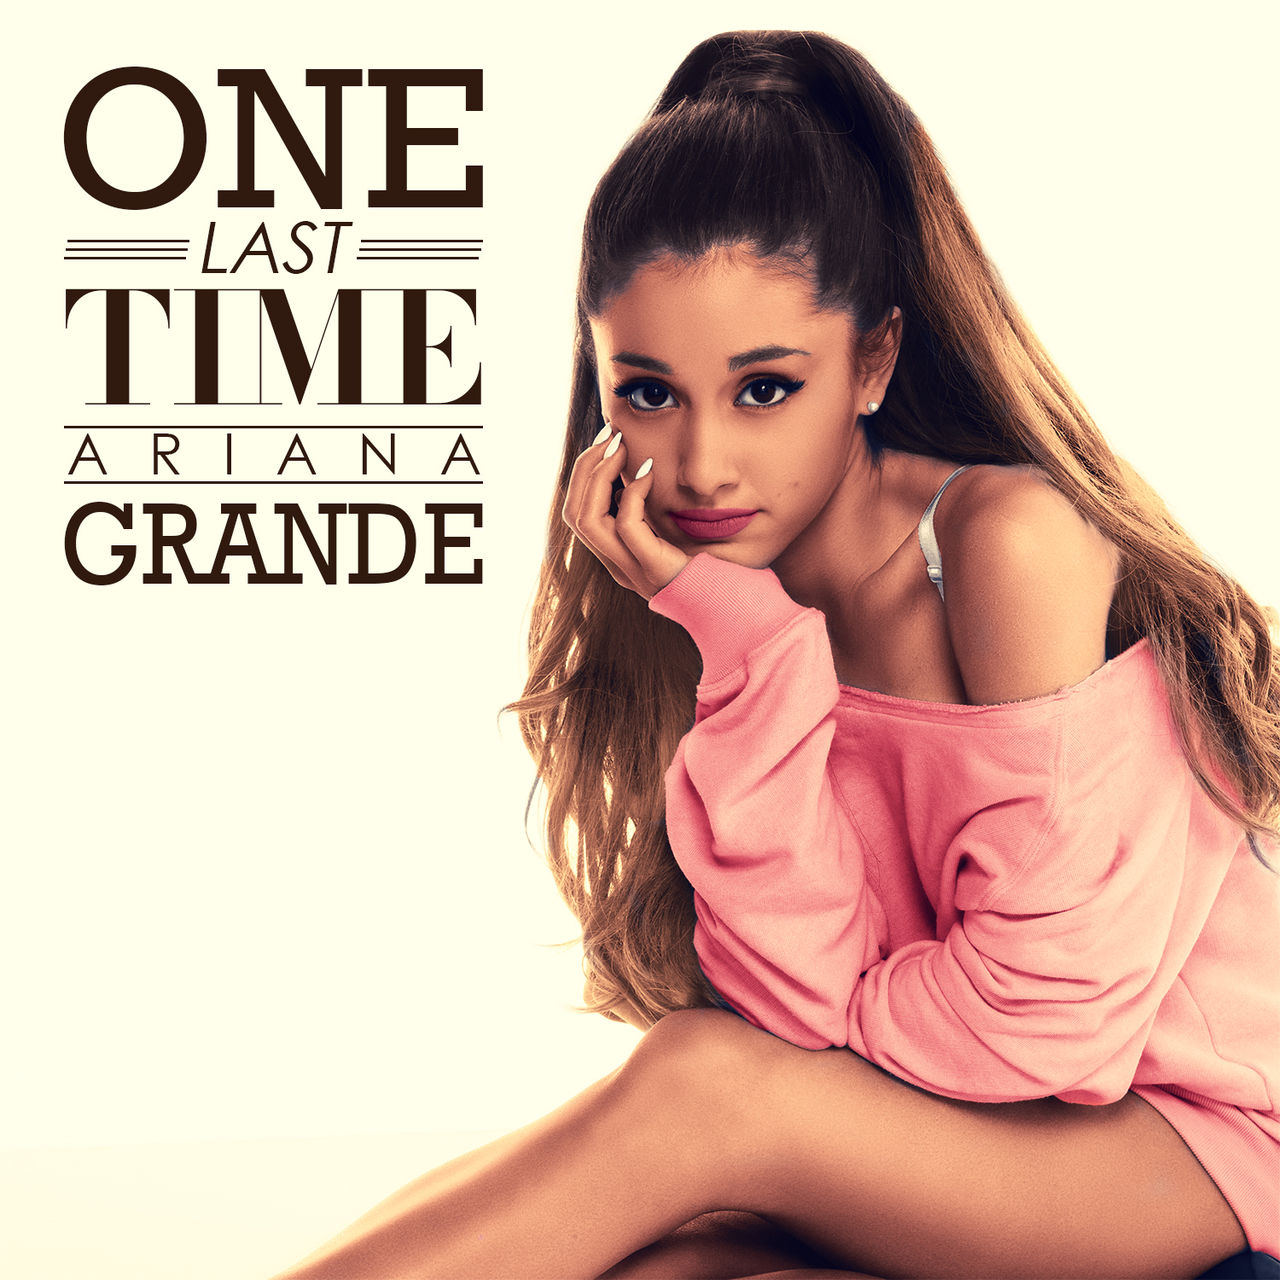 One Last Time - Ariana Grande (musicfreak97)